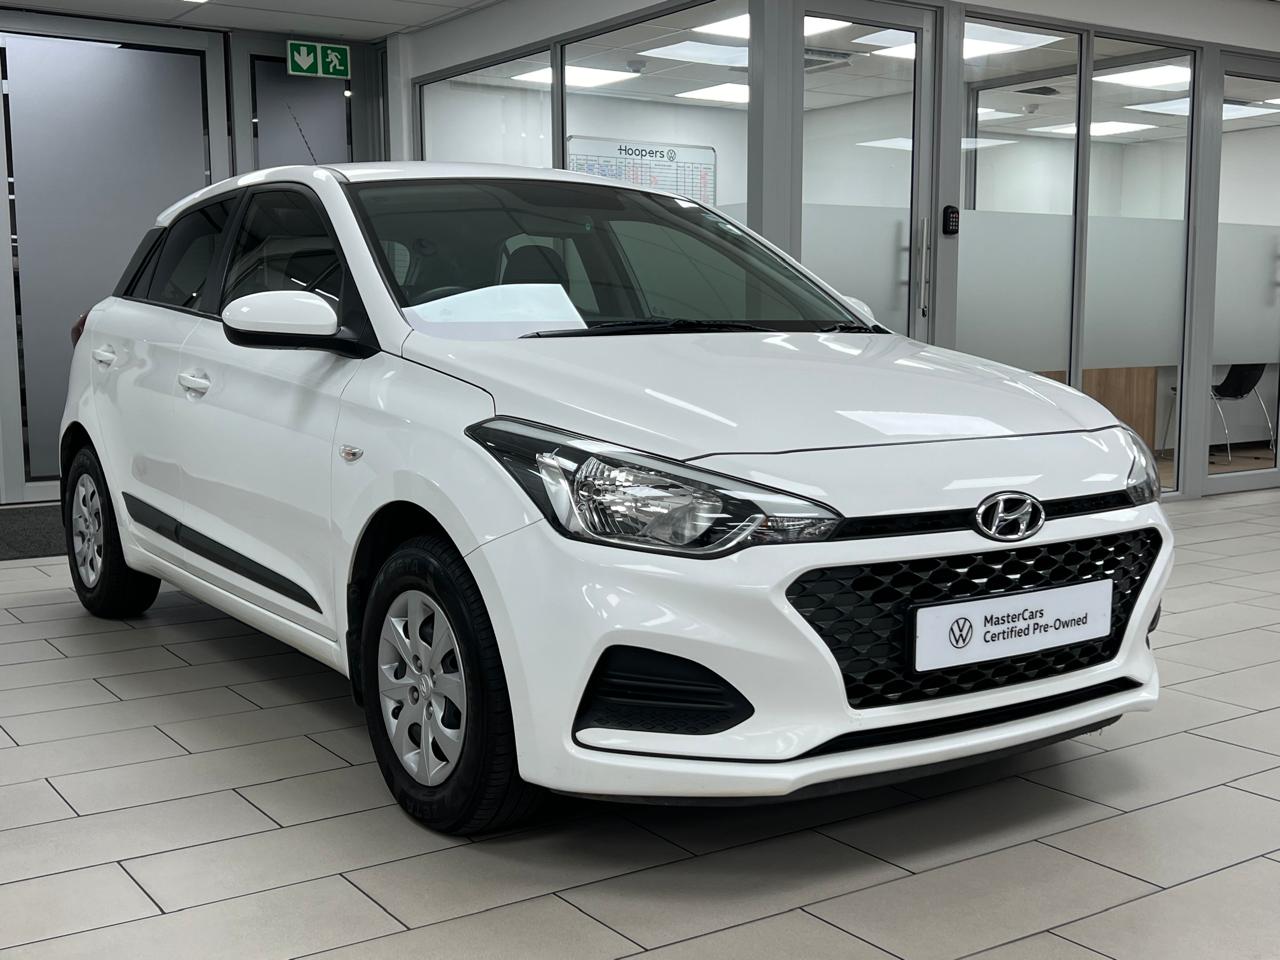 2019 Hyundai i20 1.4 Motion Auto For Sale